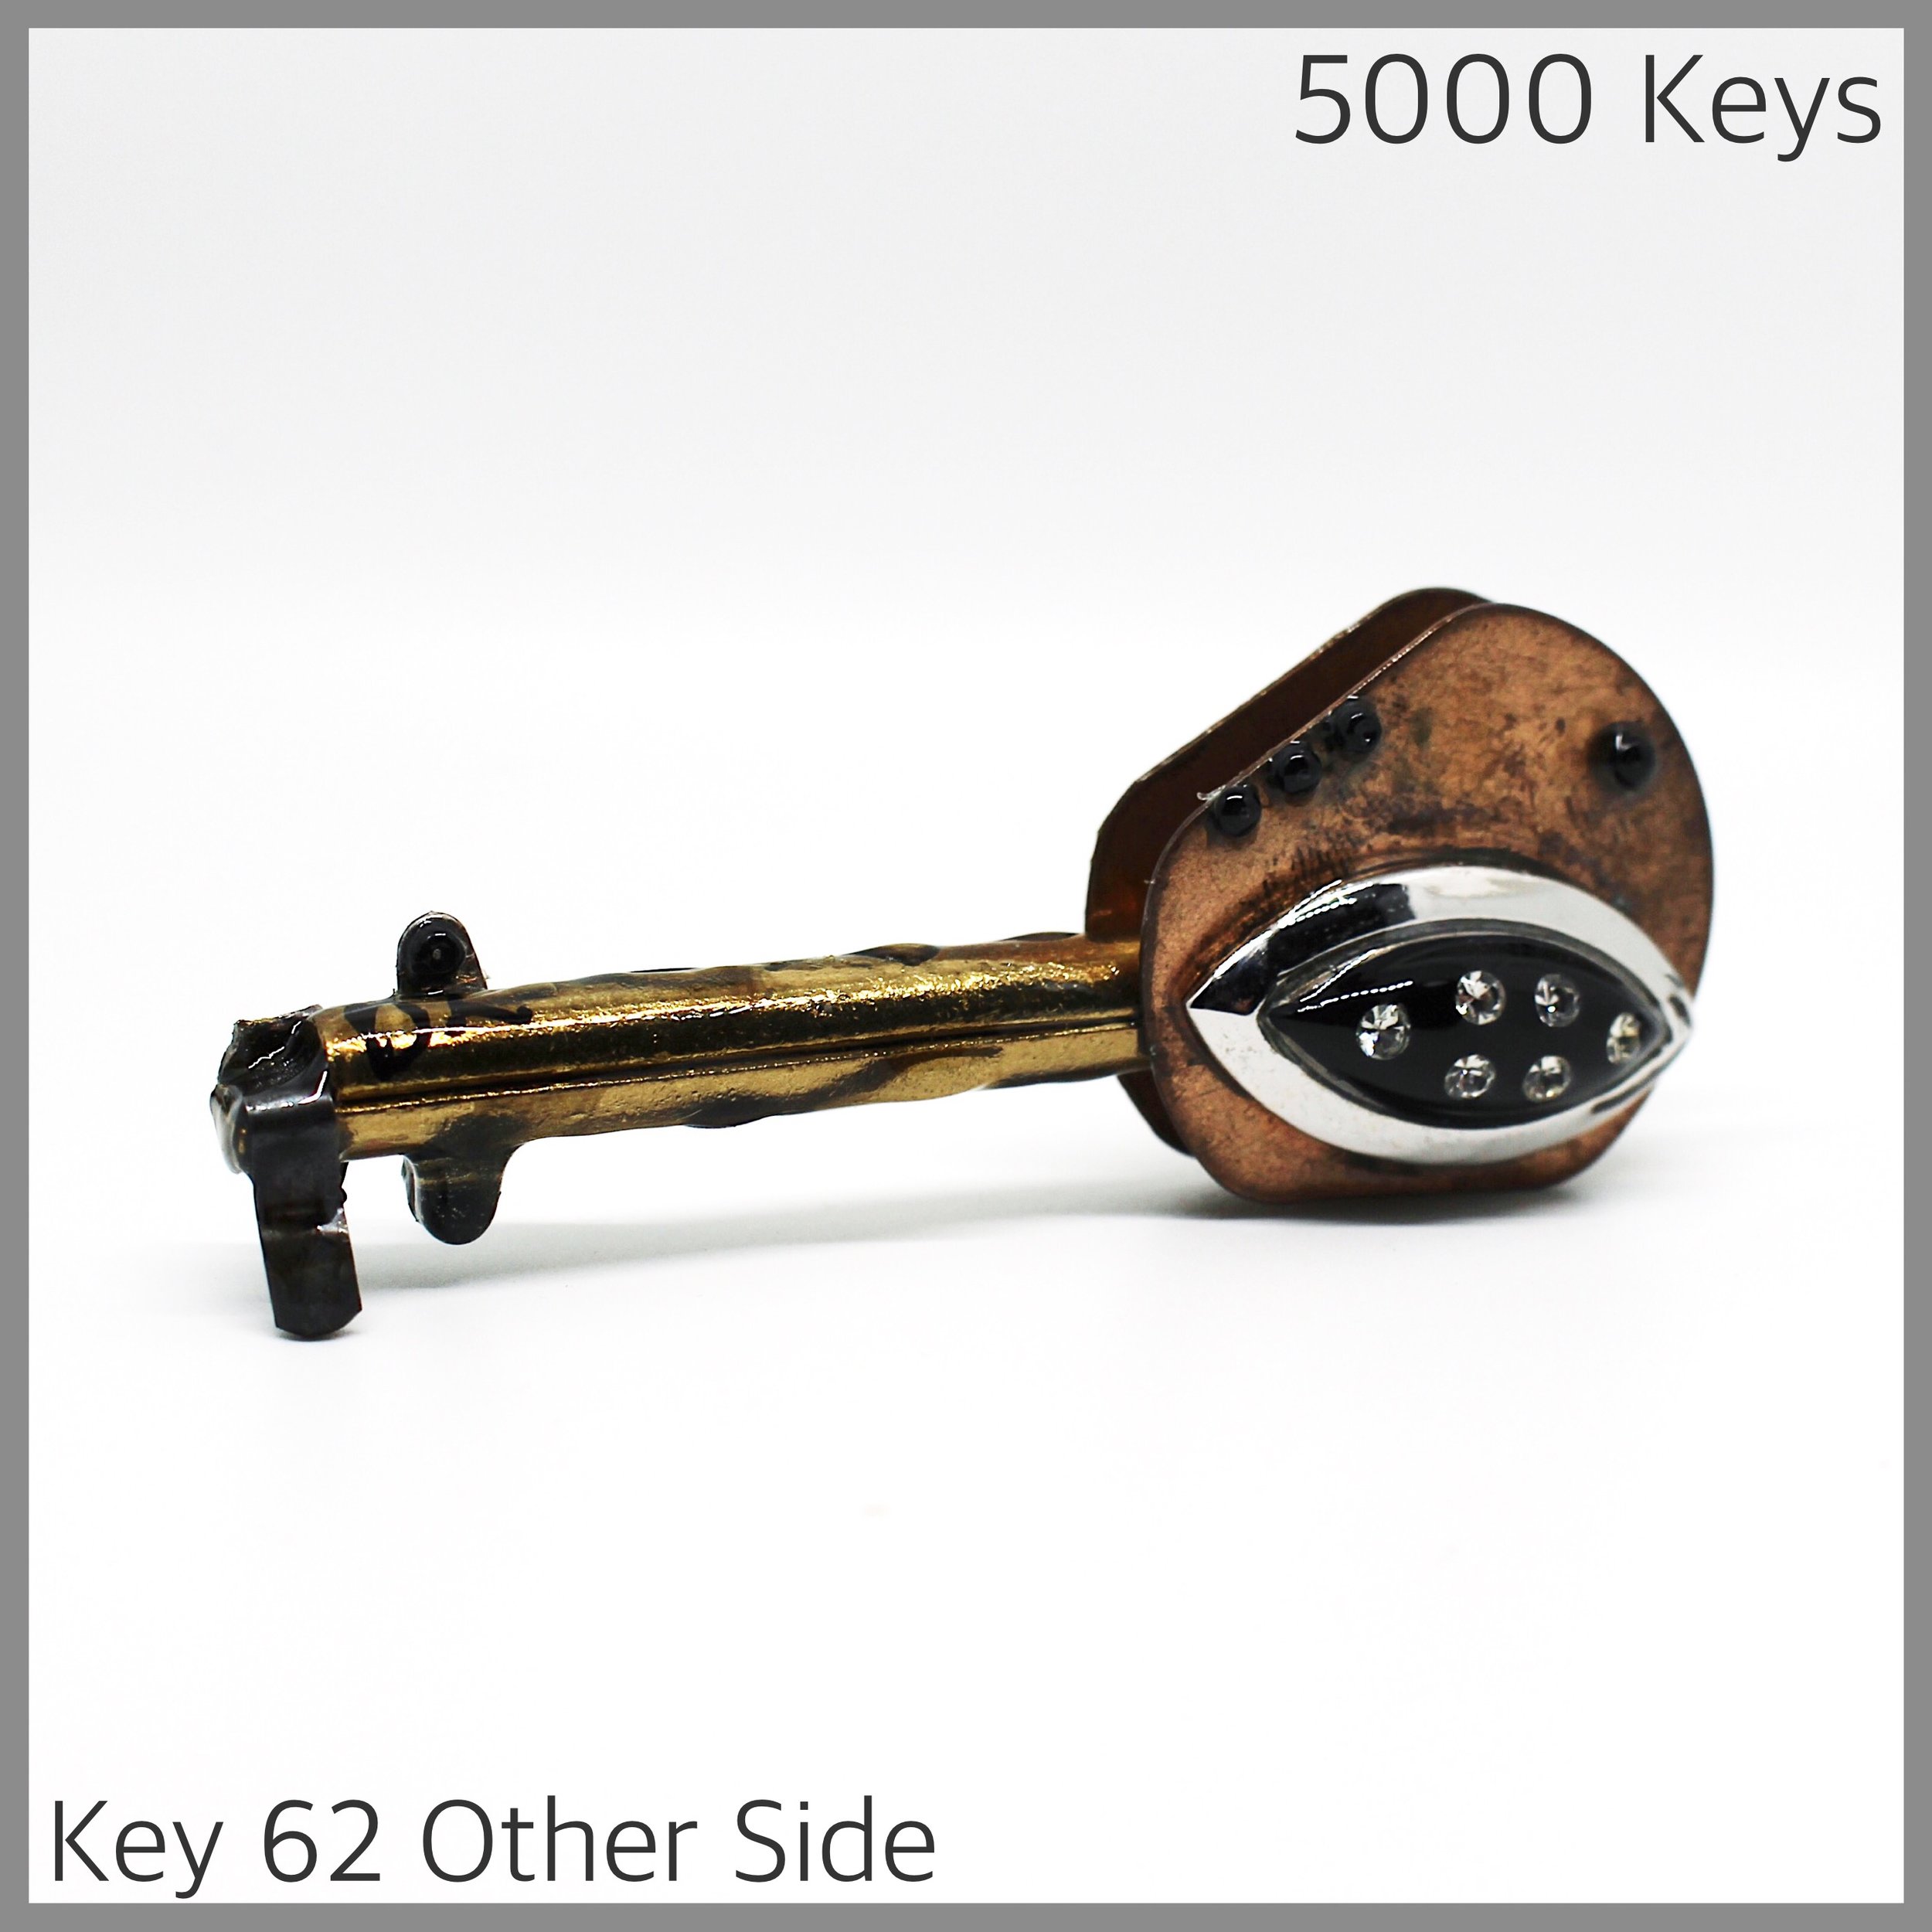 Key 62 other side - 1.JPG